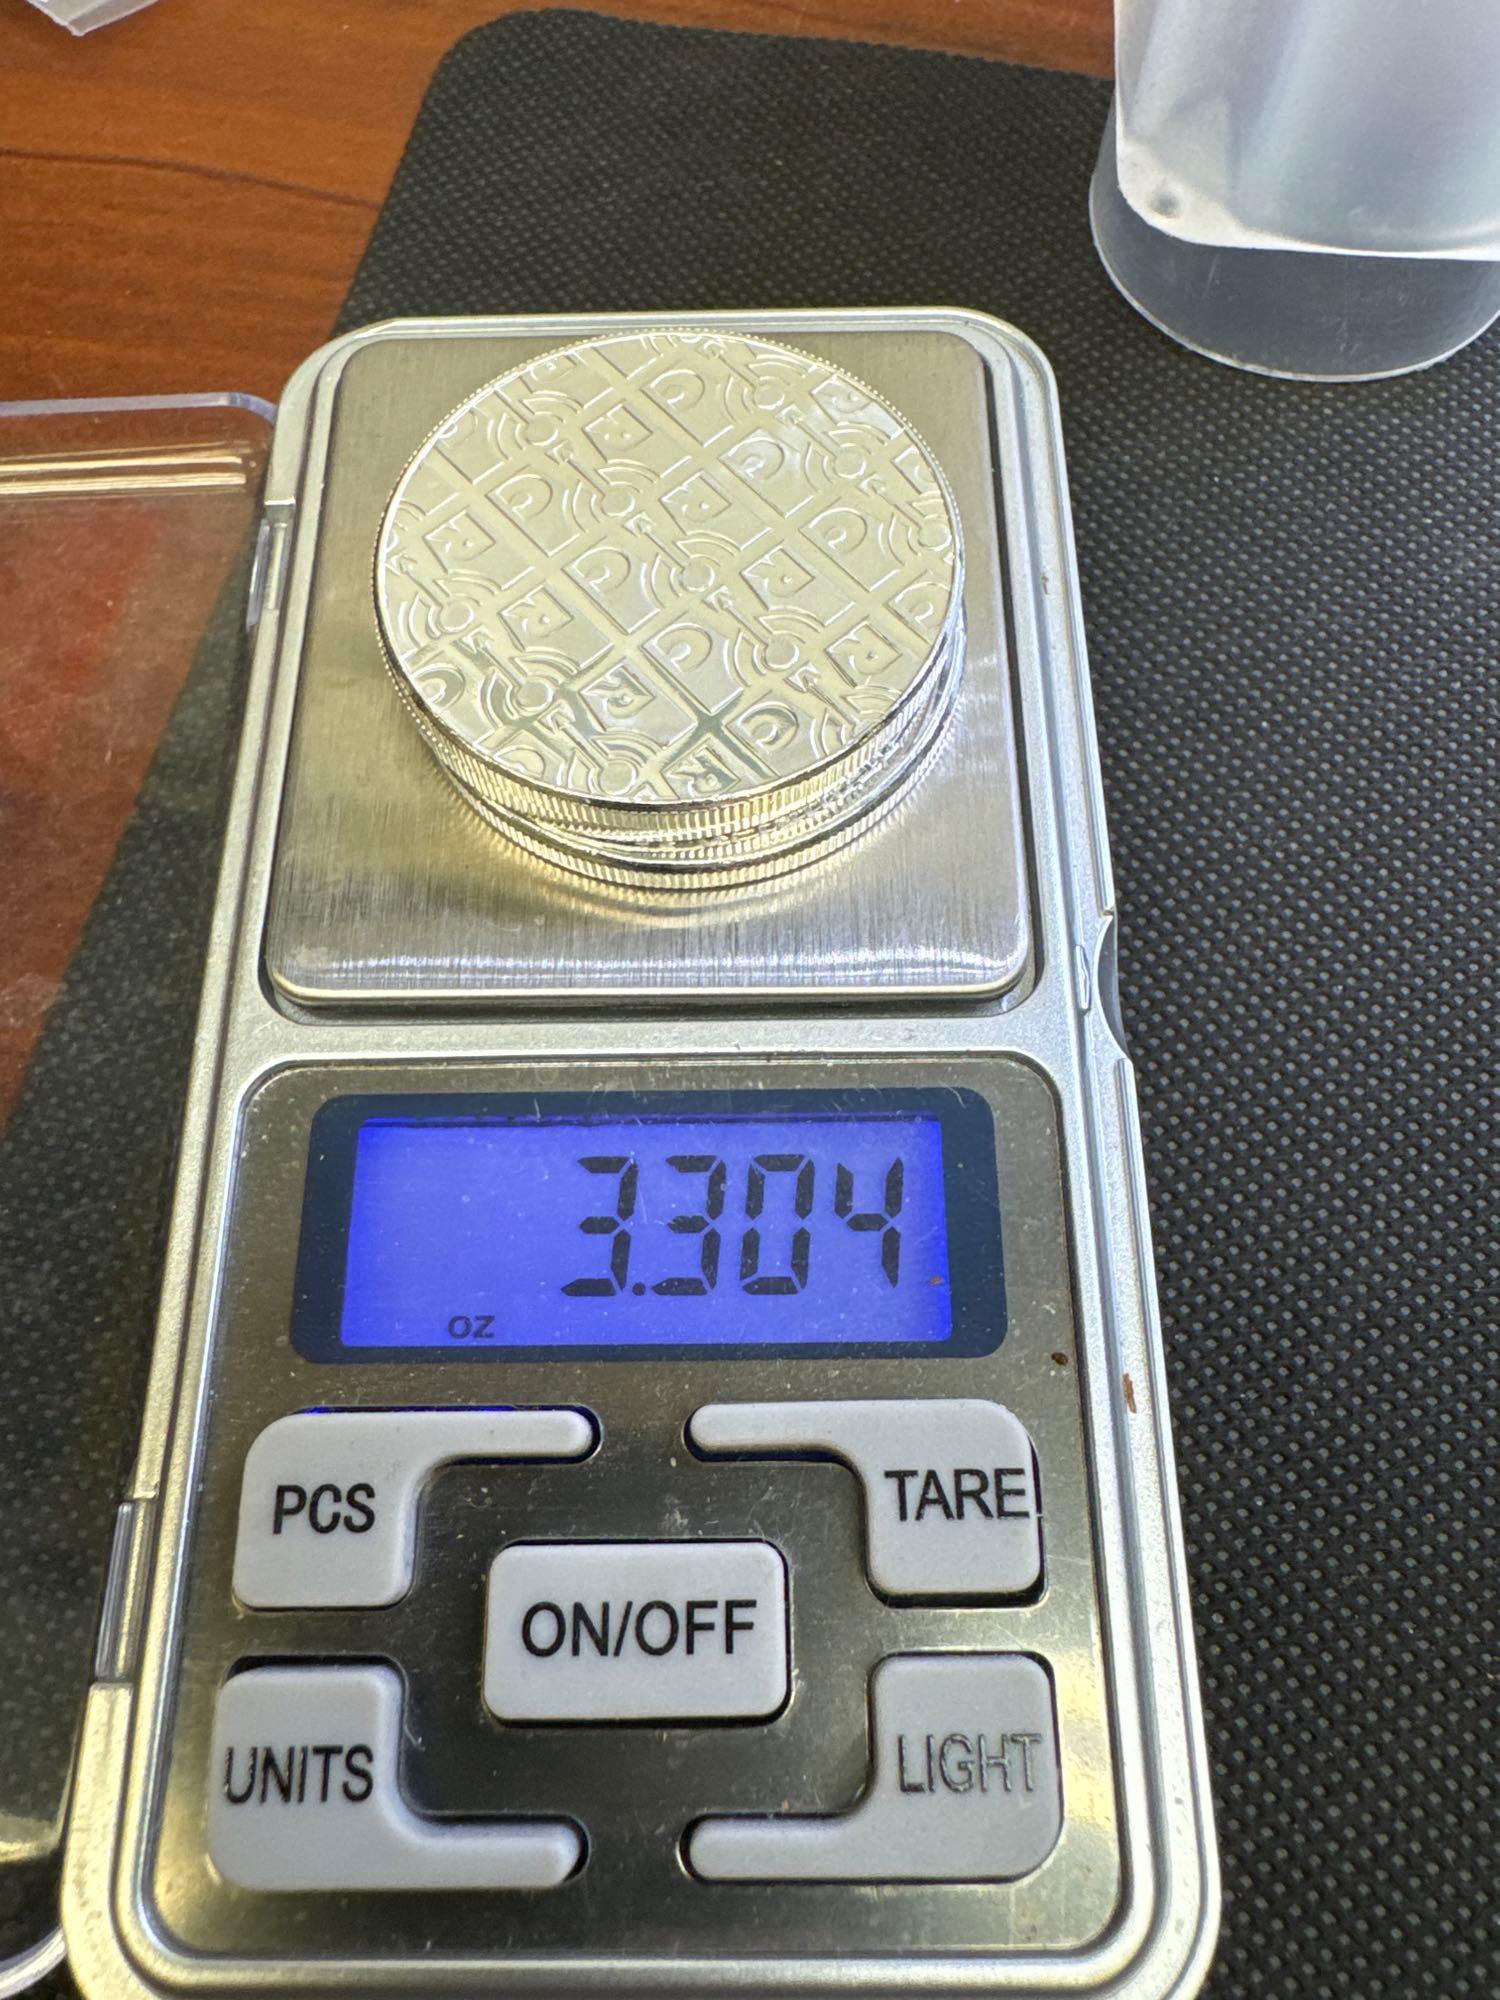 3x RMC 1 Troy Oz .999 Fine Silver Bullion Coin 3.30 Oz